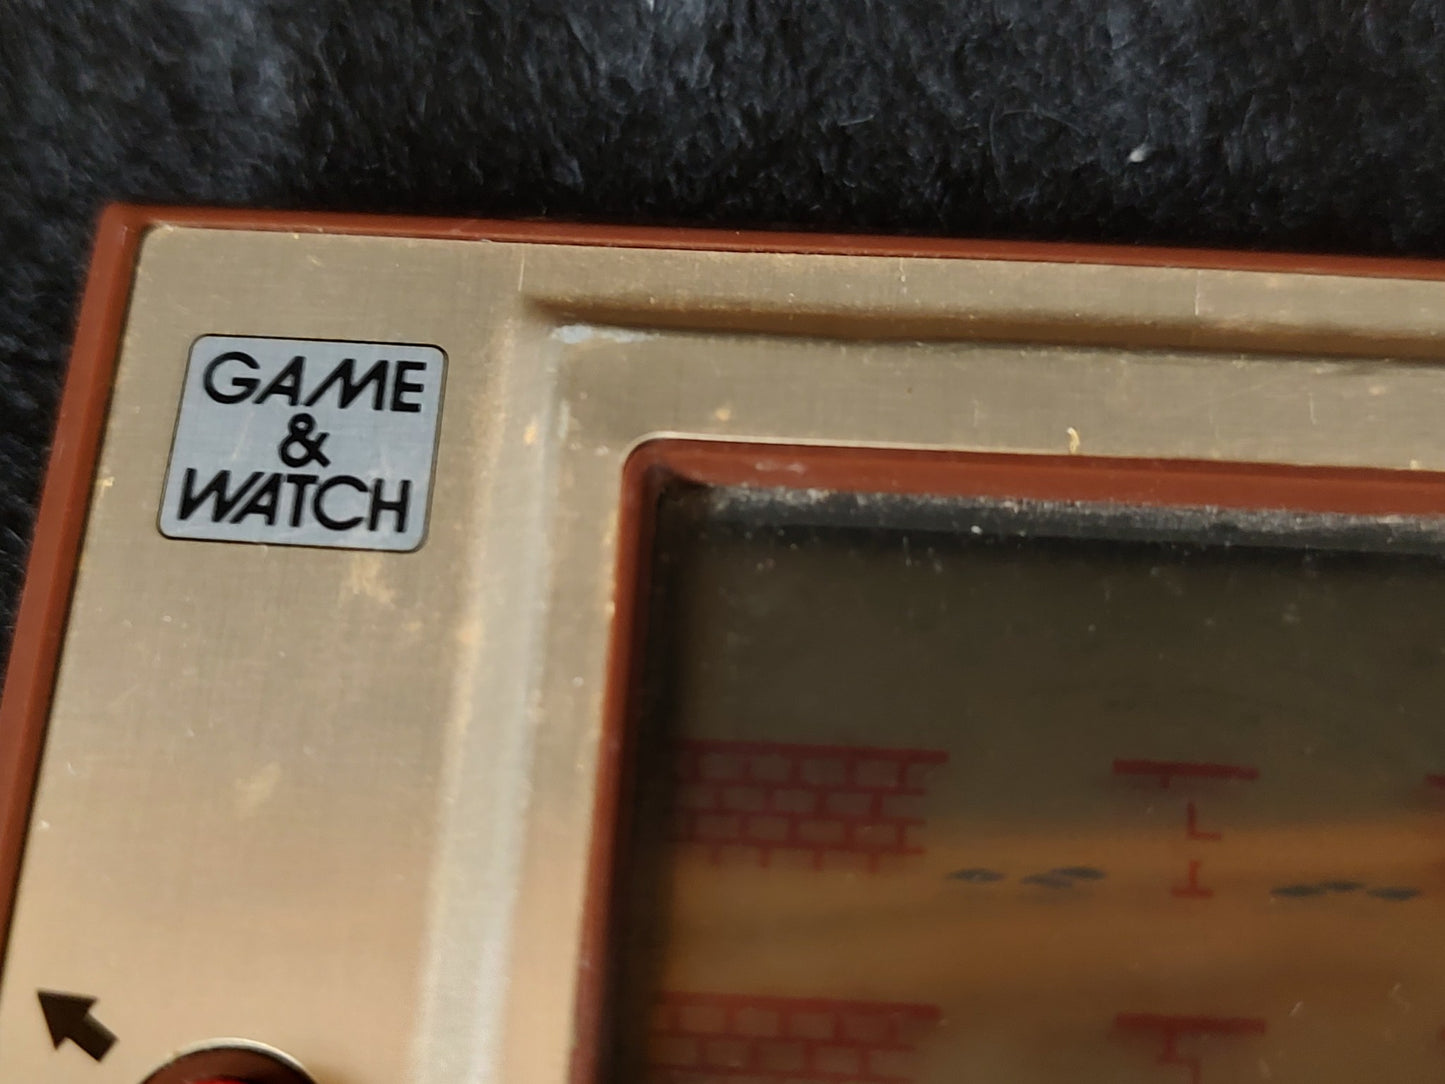 Vintage Nintendo Game & Watch Manhole (utility hole) Handheld game tested-f1219-